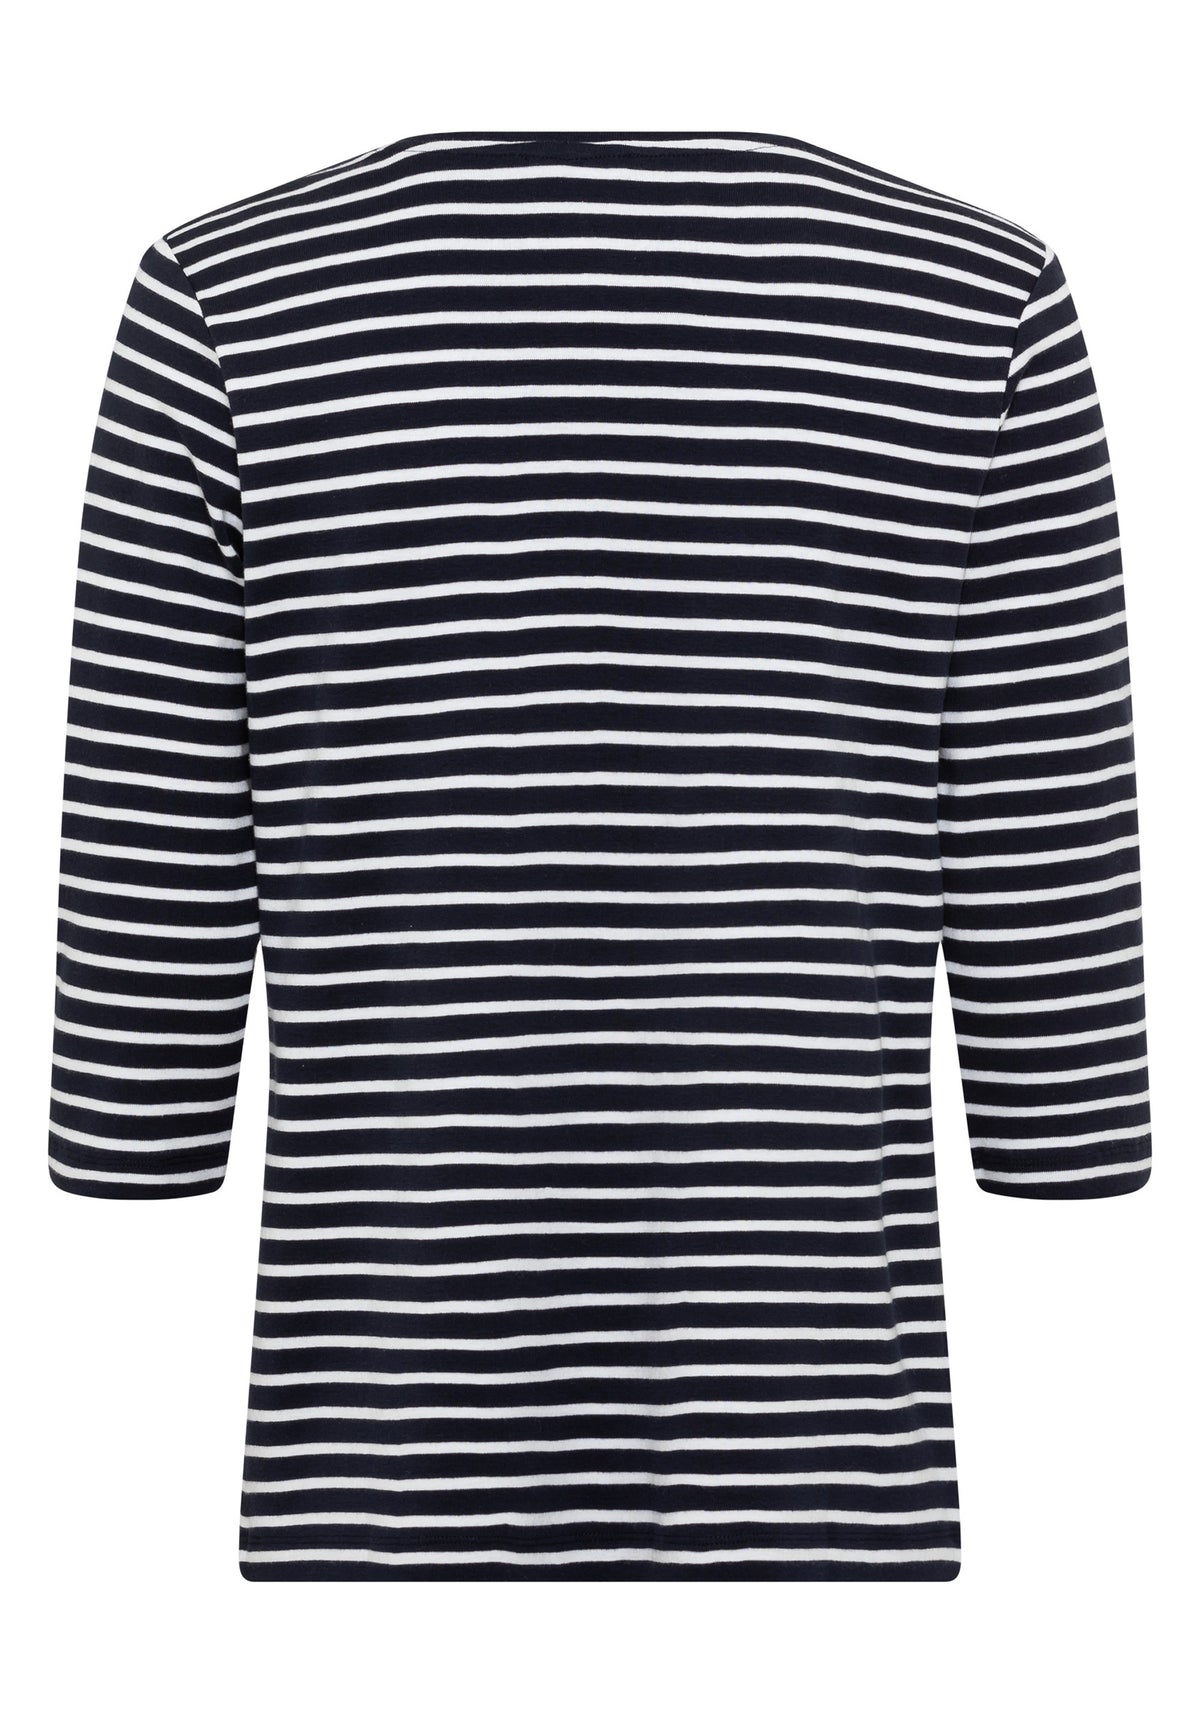 100% Cotton 3/4 Sleeve Striped T-Shirt